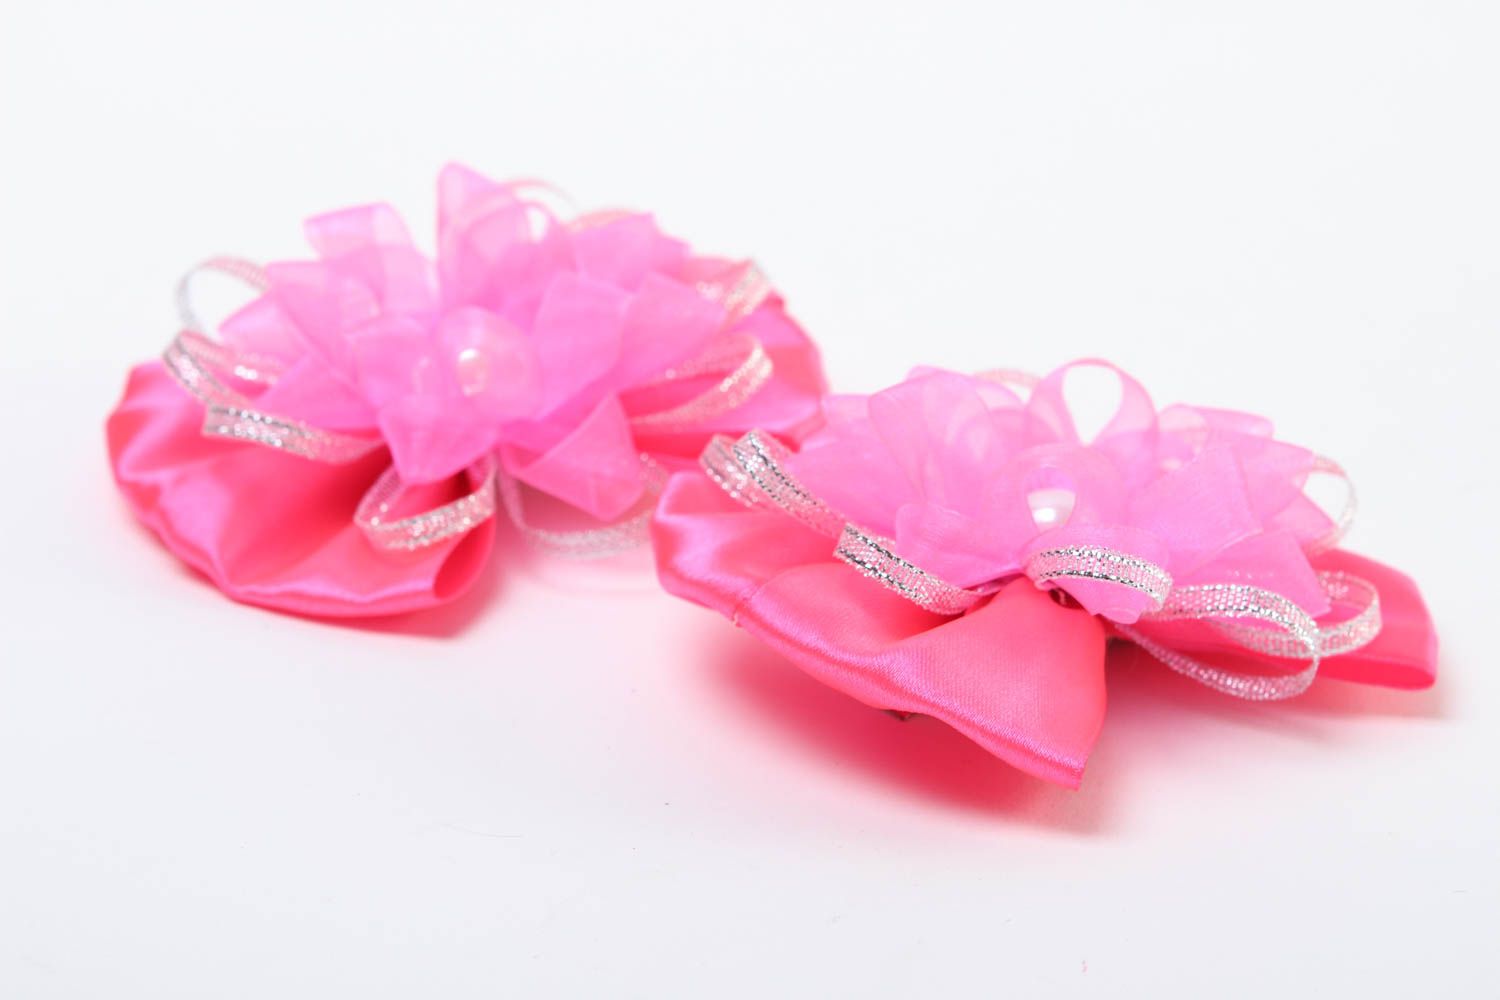 Handmade hair clip designer hair accessory gift ideas unusual gift for girl photo 3